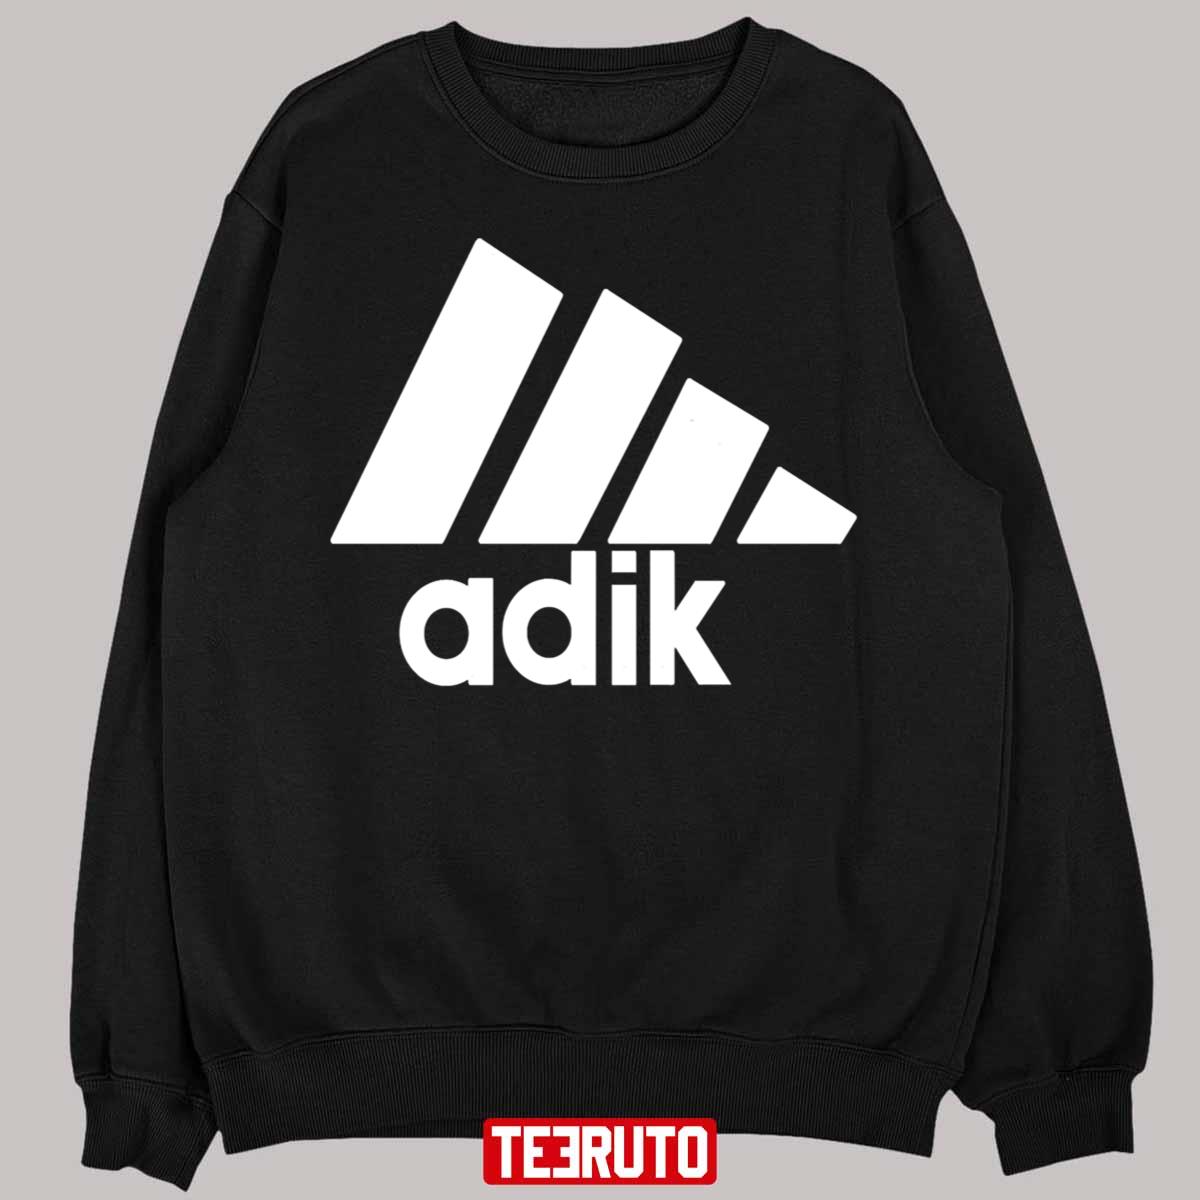 Adik Logo Escape From Tarkov Adidas Parody Unisex T-Shirt